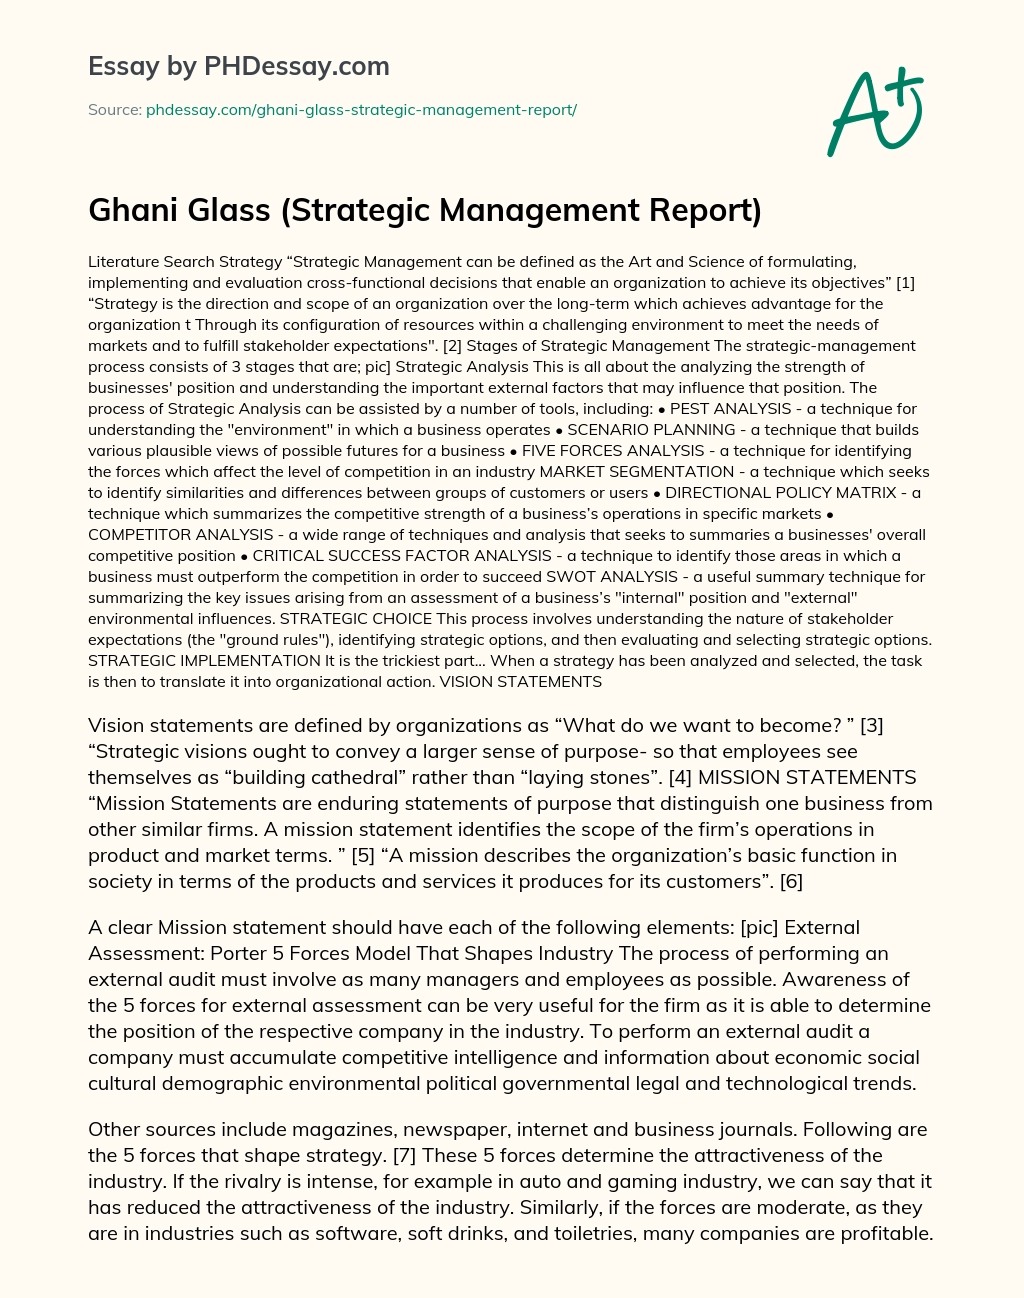 Ghani Glass (Strategic Management Report) essay